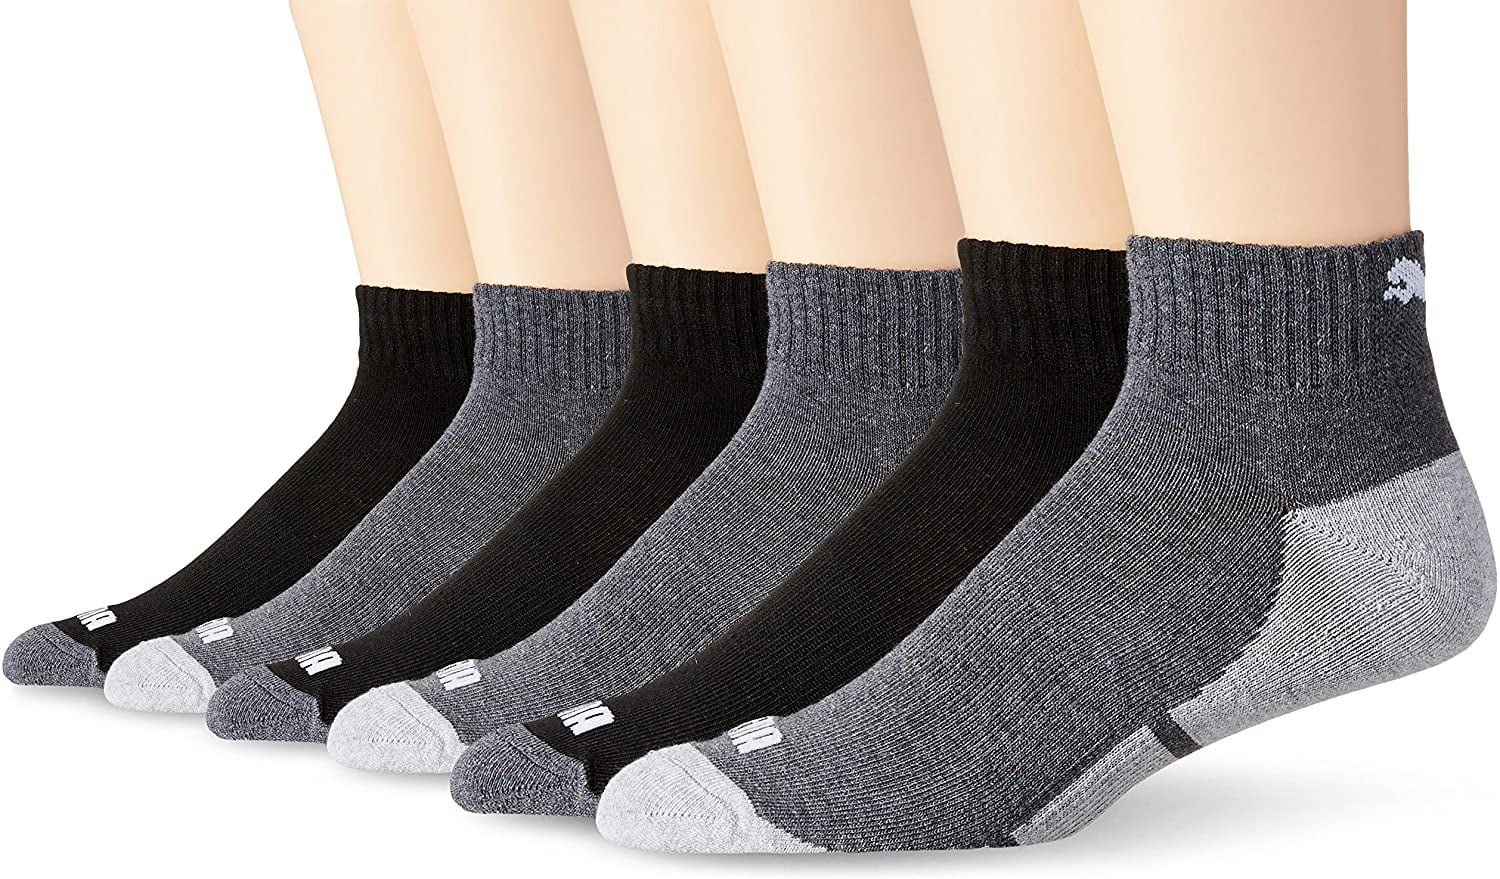 socks size for shoe size 10